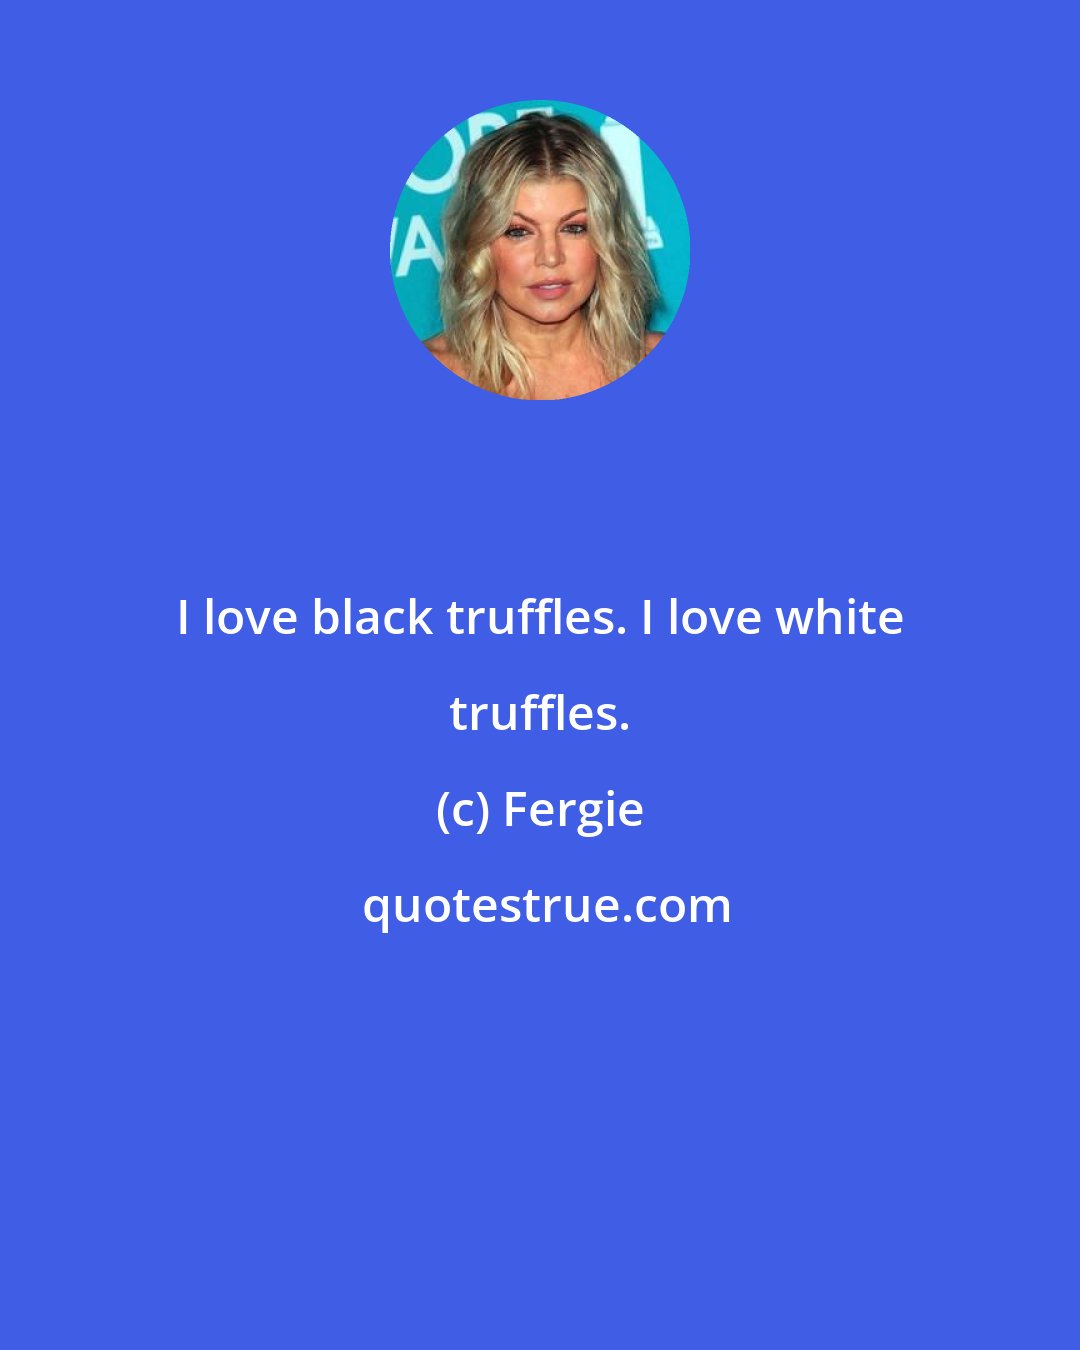 Fergie: I love black truffles. I love white truffles.